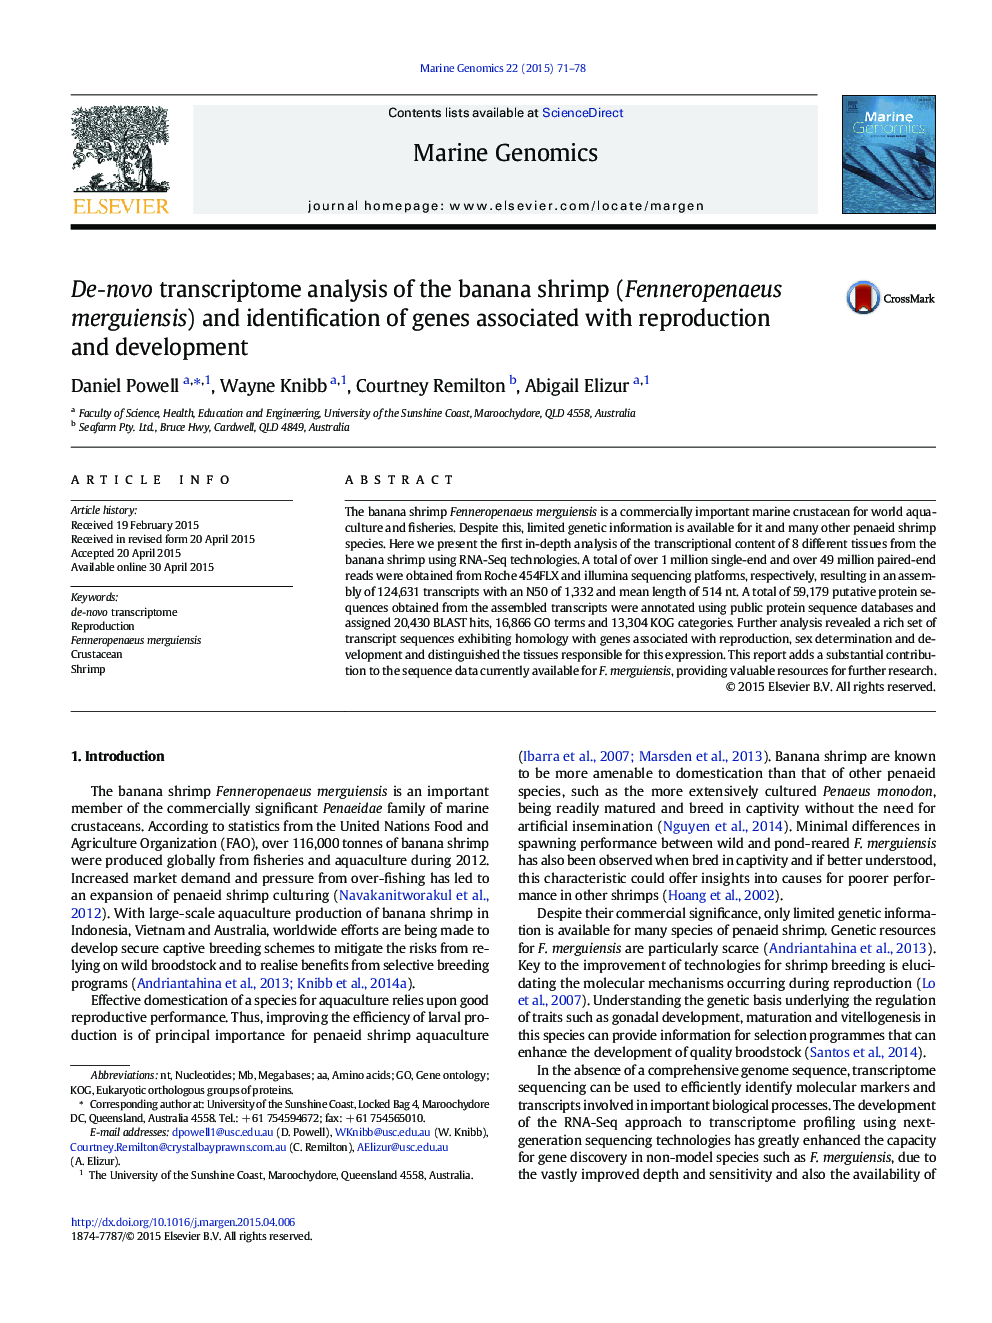 De-novo transcriptome analysis of the banana shrimp (Fenneropenaeus merguiensis) and identification of genes associated with reproduction and development